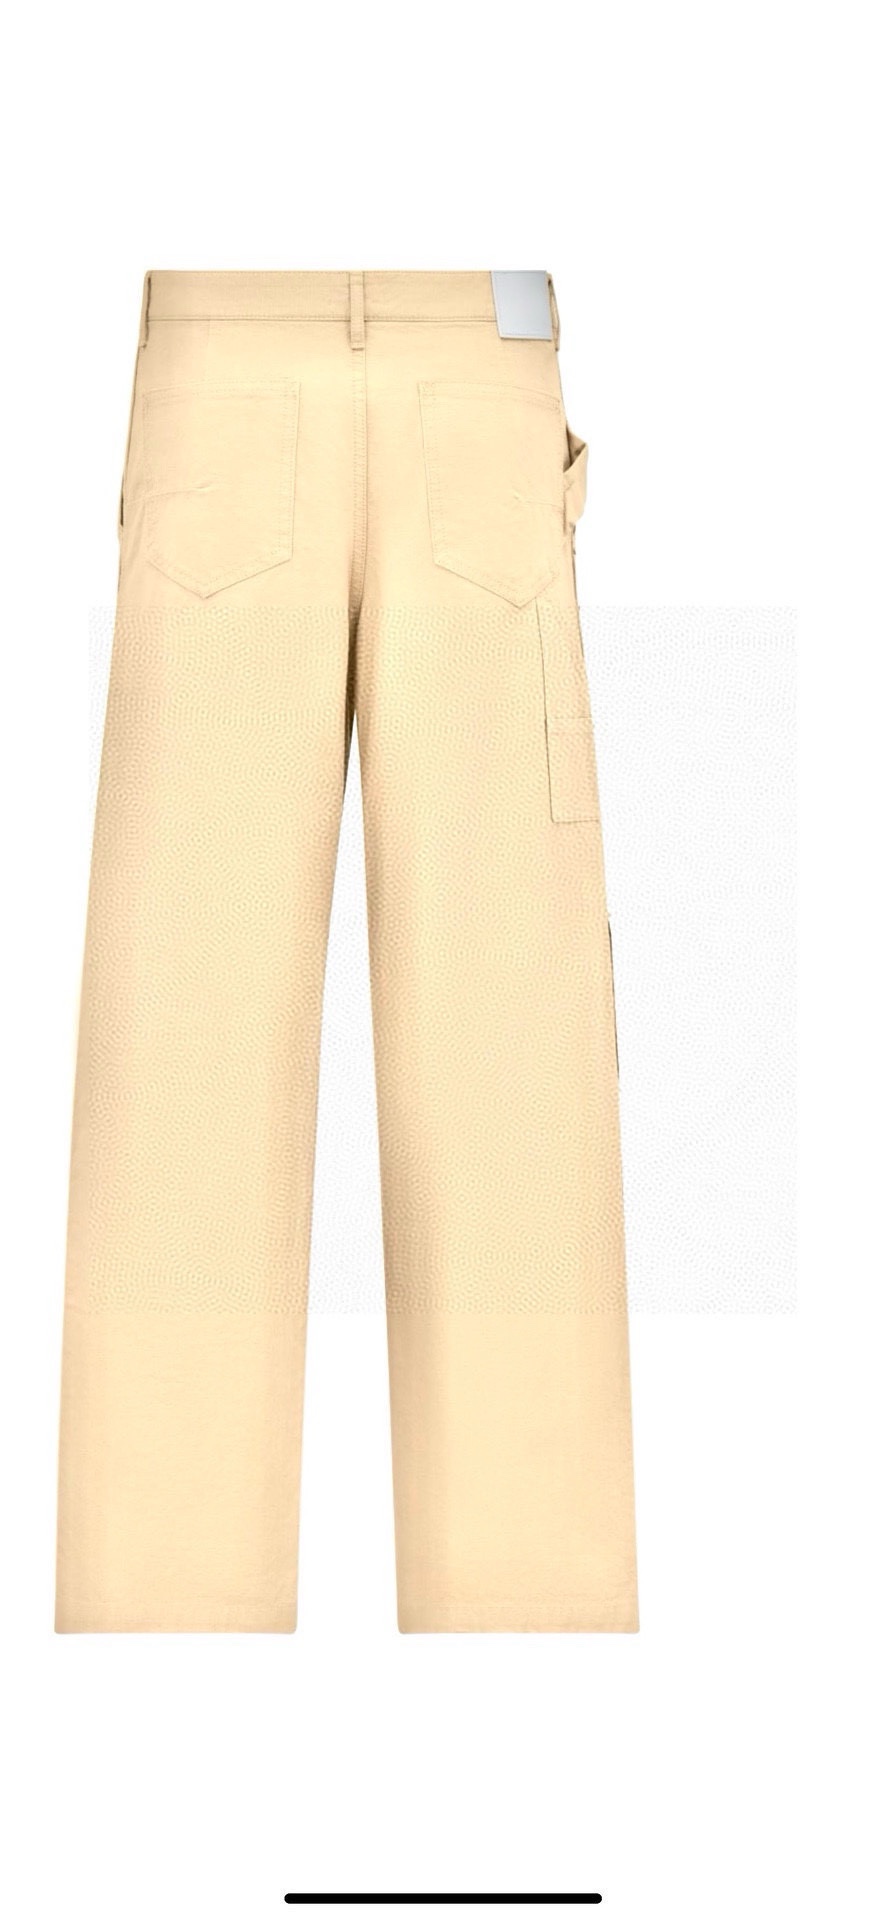 Dior迪奥款式男款工装裤牛仔裤mensjeanssize30-38have35NO37立体裁剪好版型手